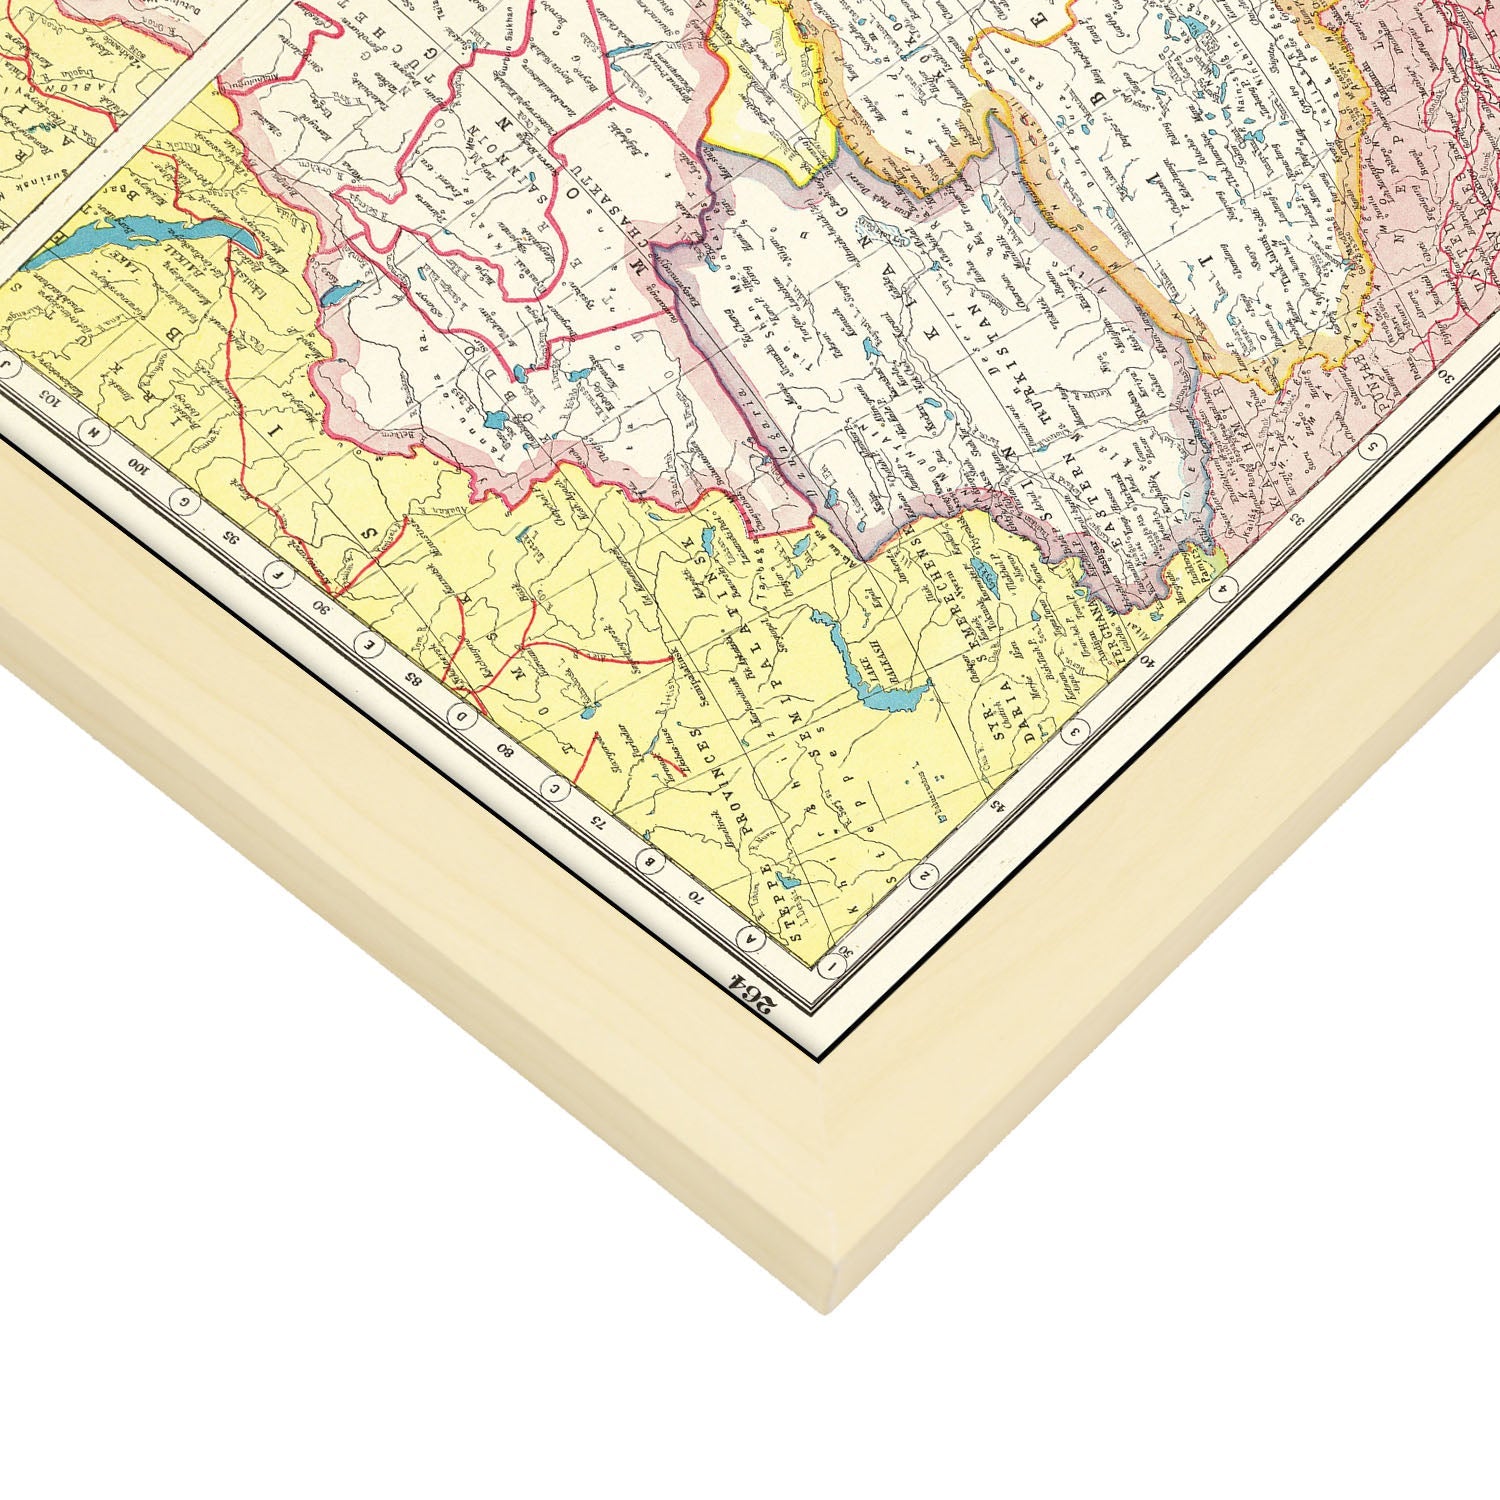 1920 map of the Chinese Republic Japan 2-Artwork-Nacnic-Nacnic Estudio SL